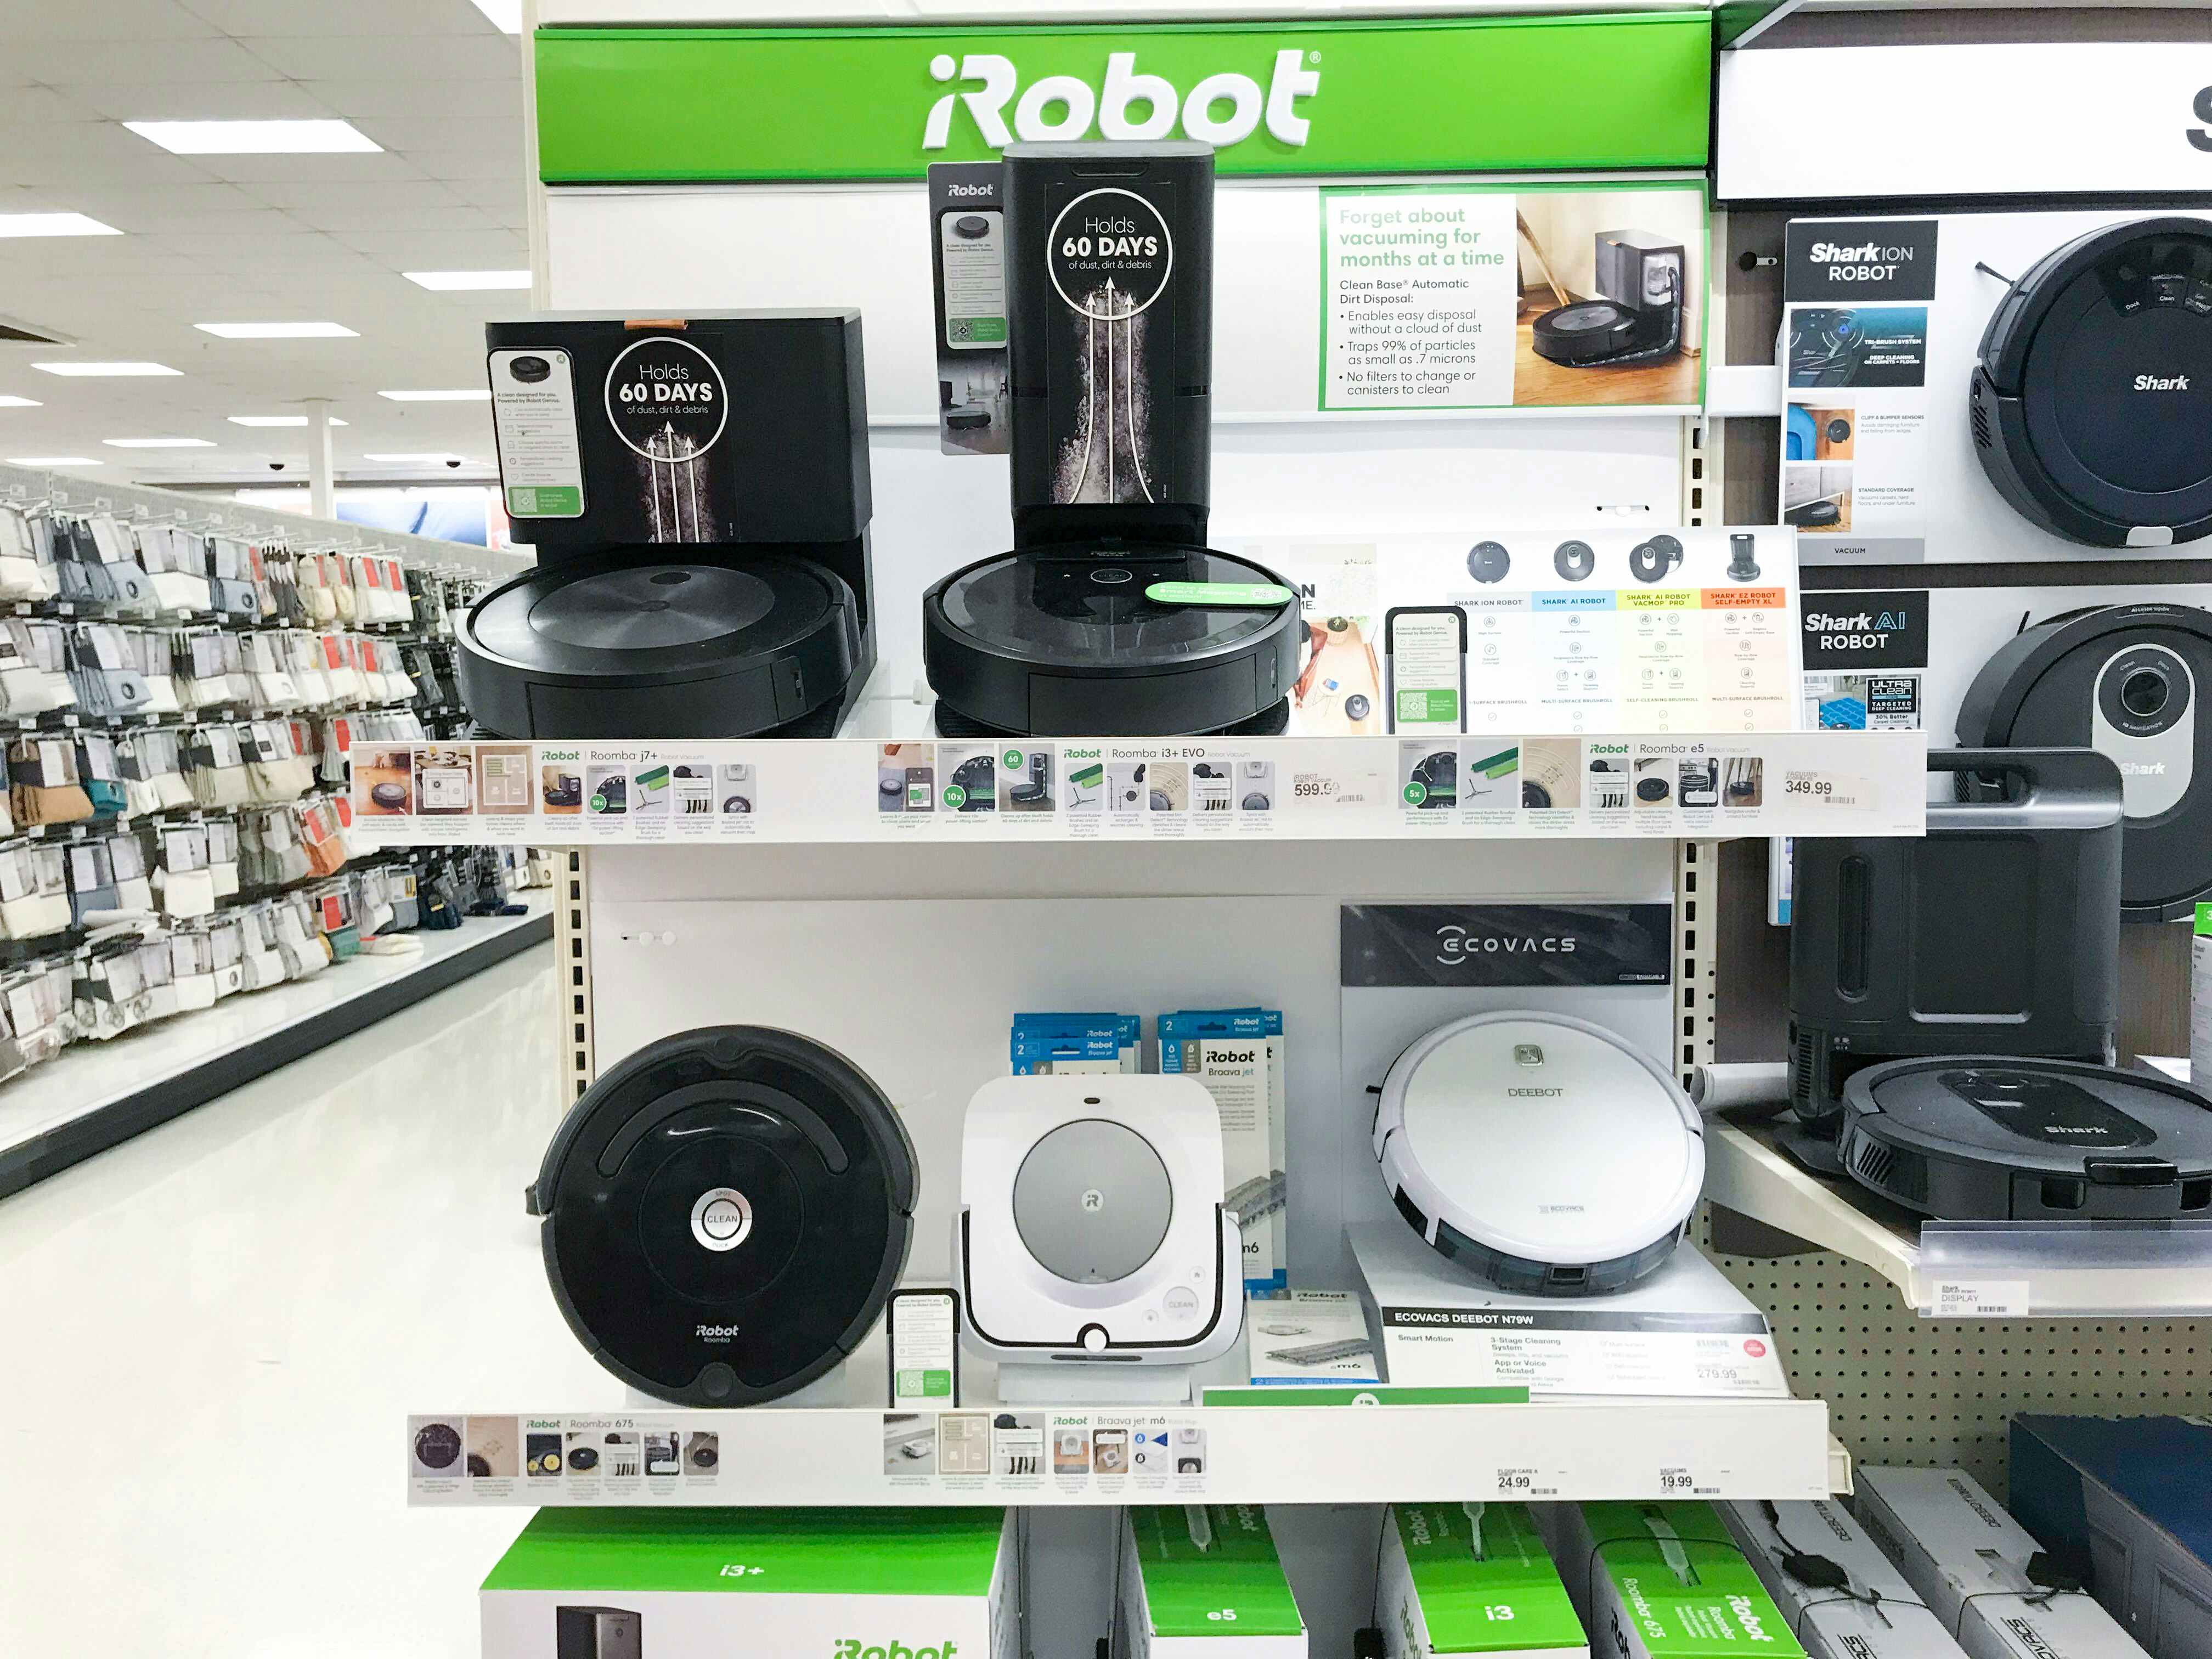 Amazon iRobot Roomba models on display at Target